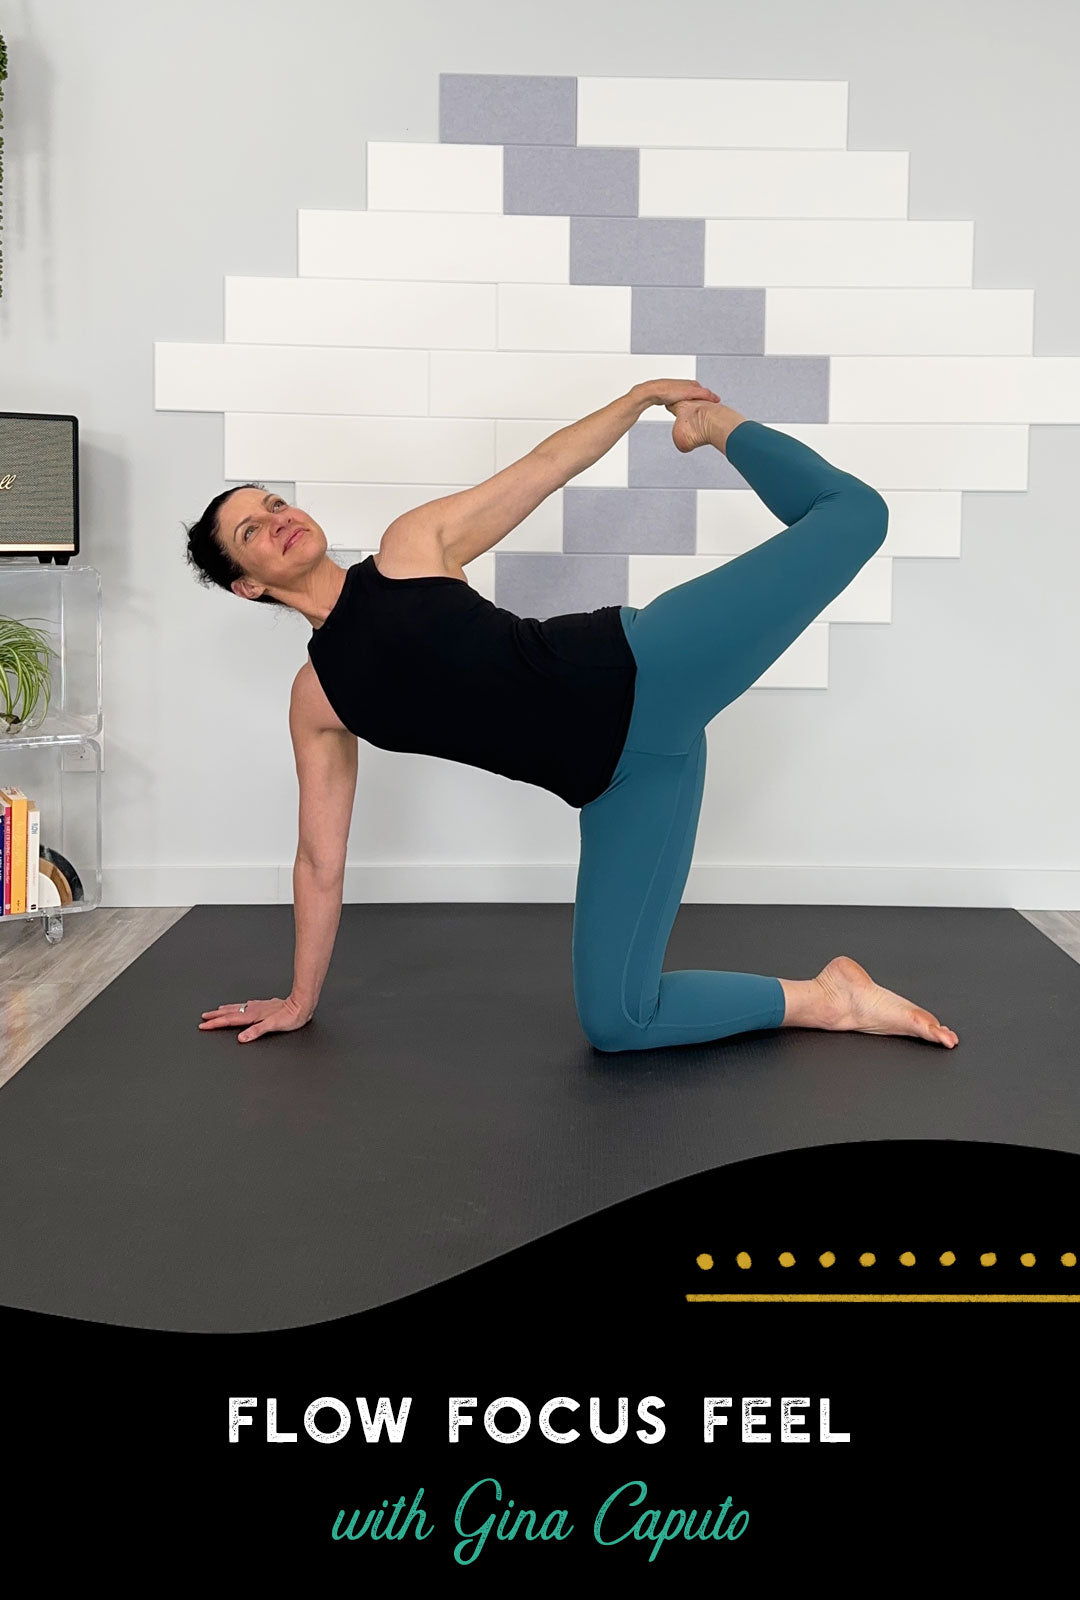 Flow Focus Feel Yoga Home Practice with Gina Caputo Health